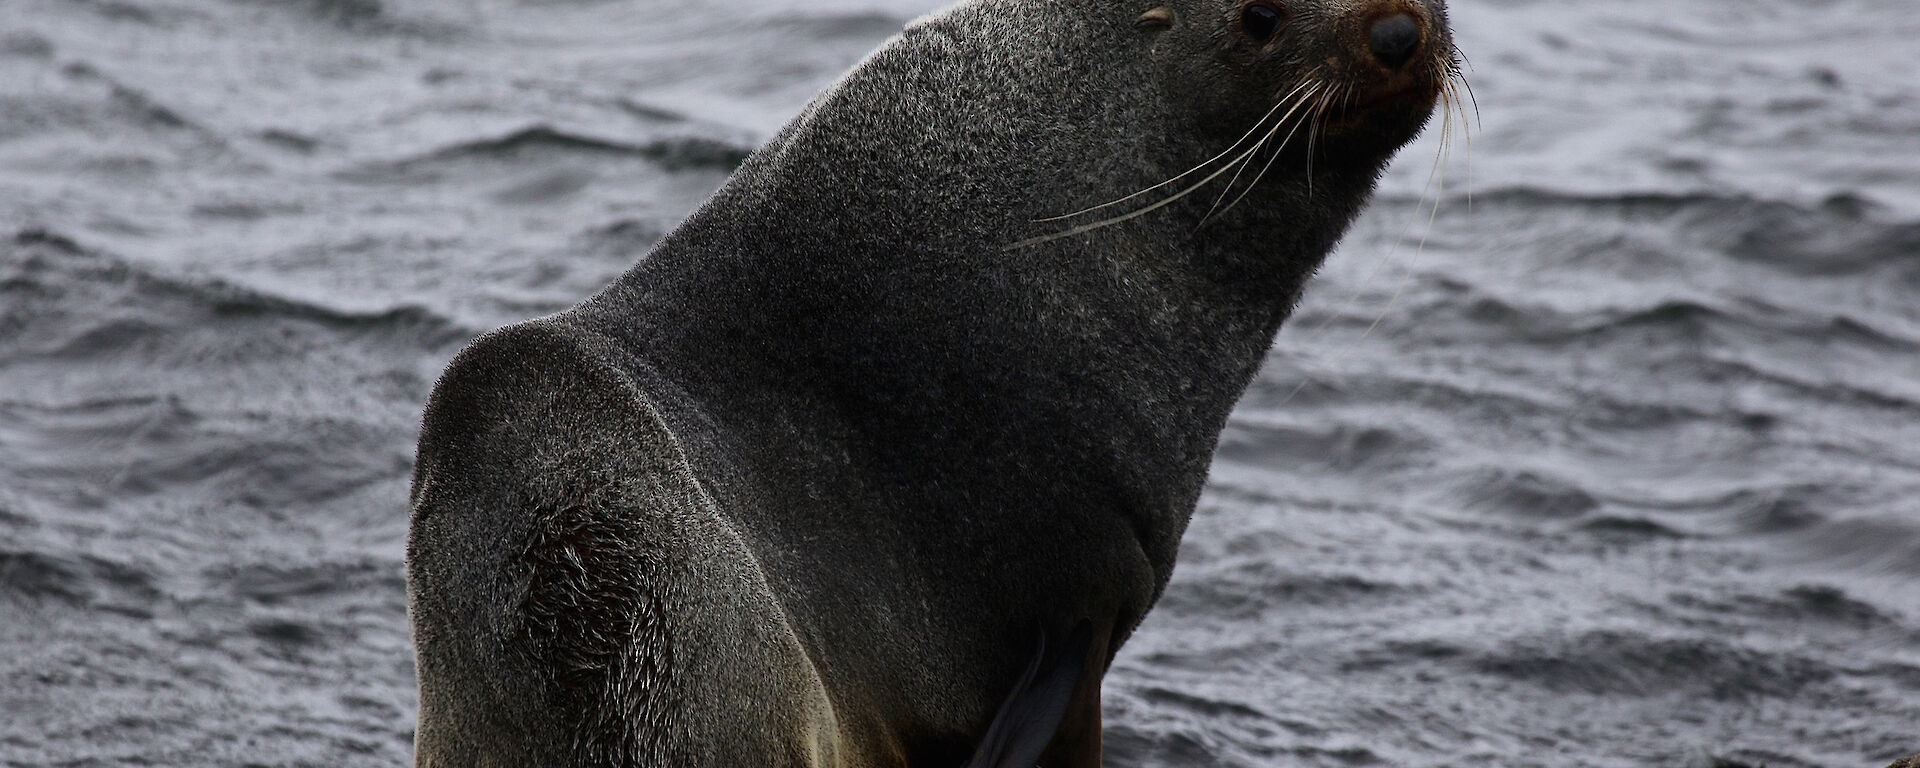 Antarctic fur seal sitting on the water’s edge.